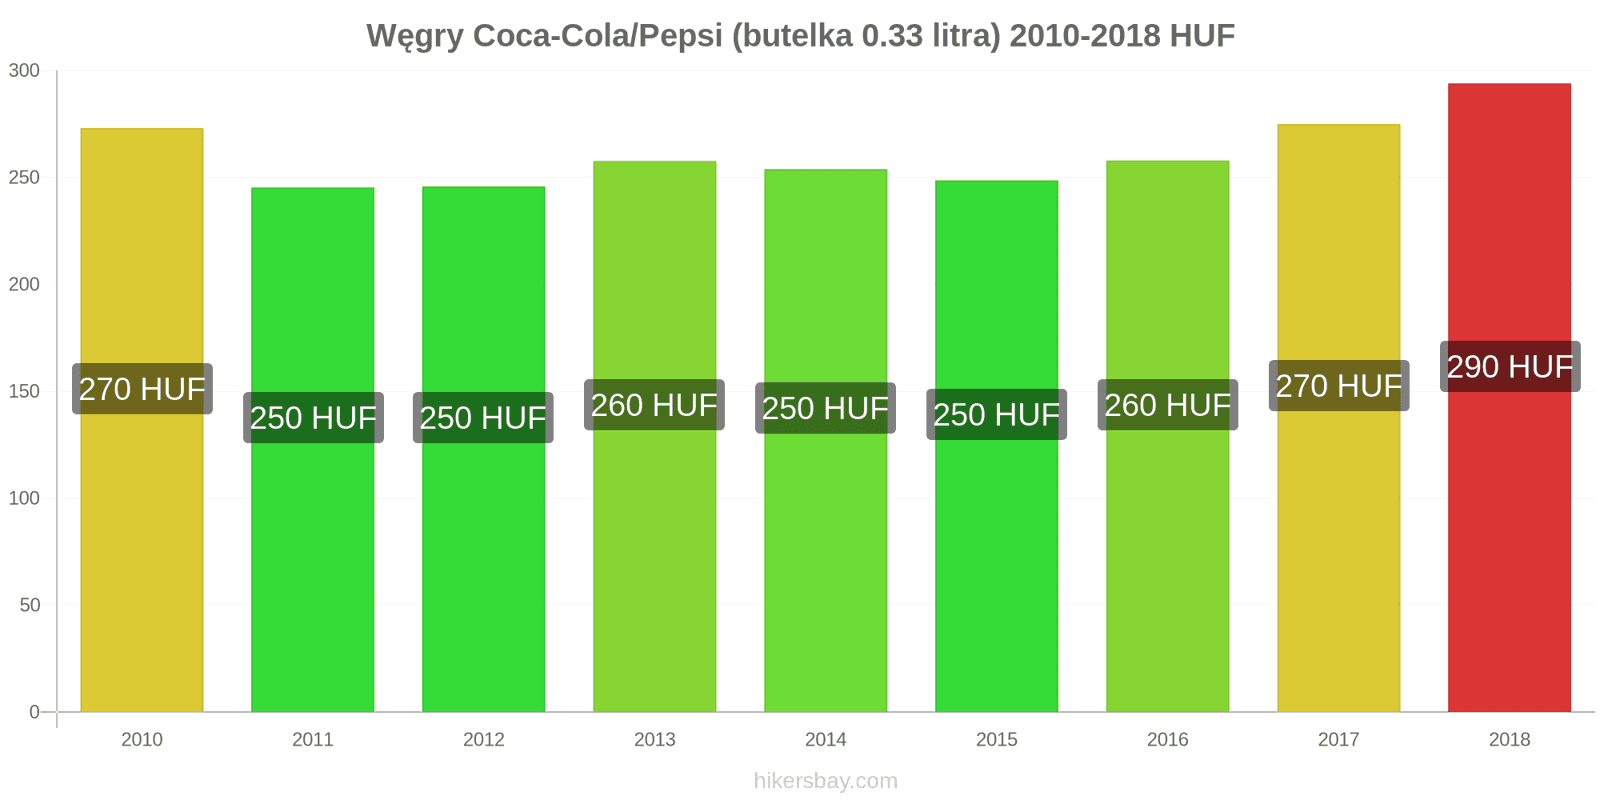 Węgry zmiany cen Coca-Cola/Pepsi (butelka 0.33 litra) hikersbay.com